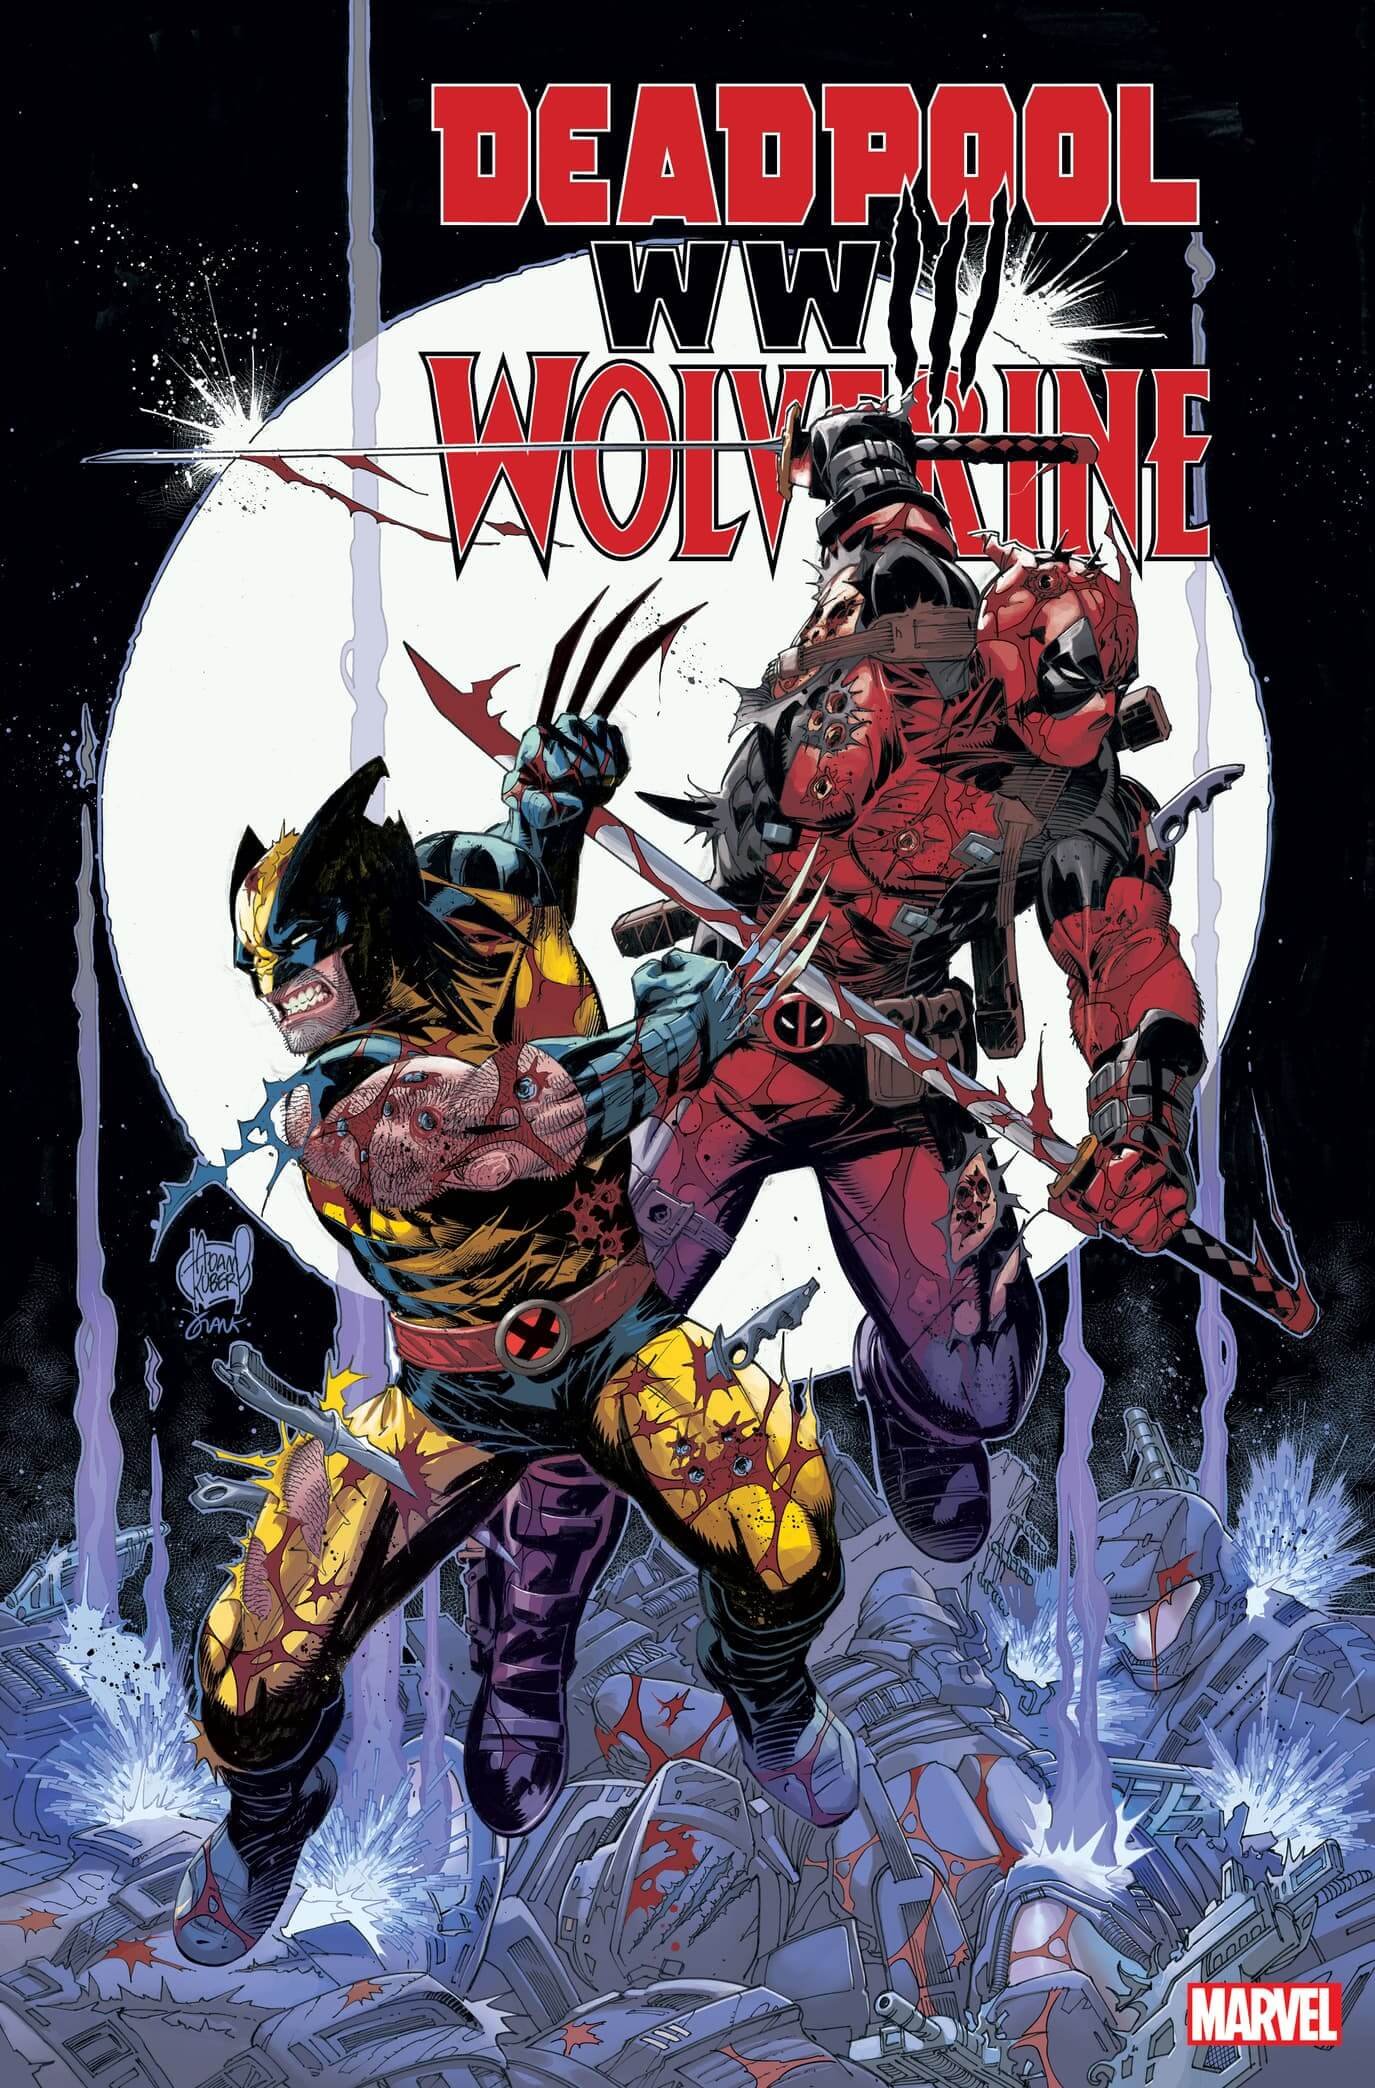 Couverture de Deadpool &amp ; Wolverine : WWIII 1 par Adam Kubert